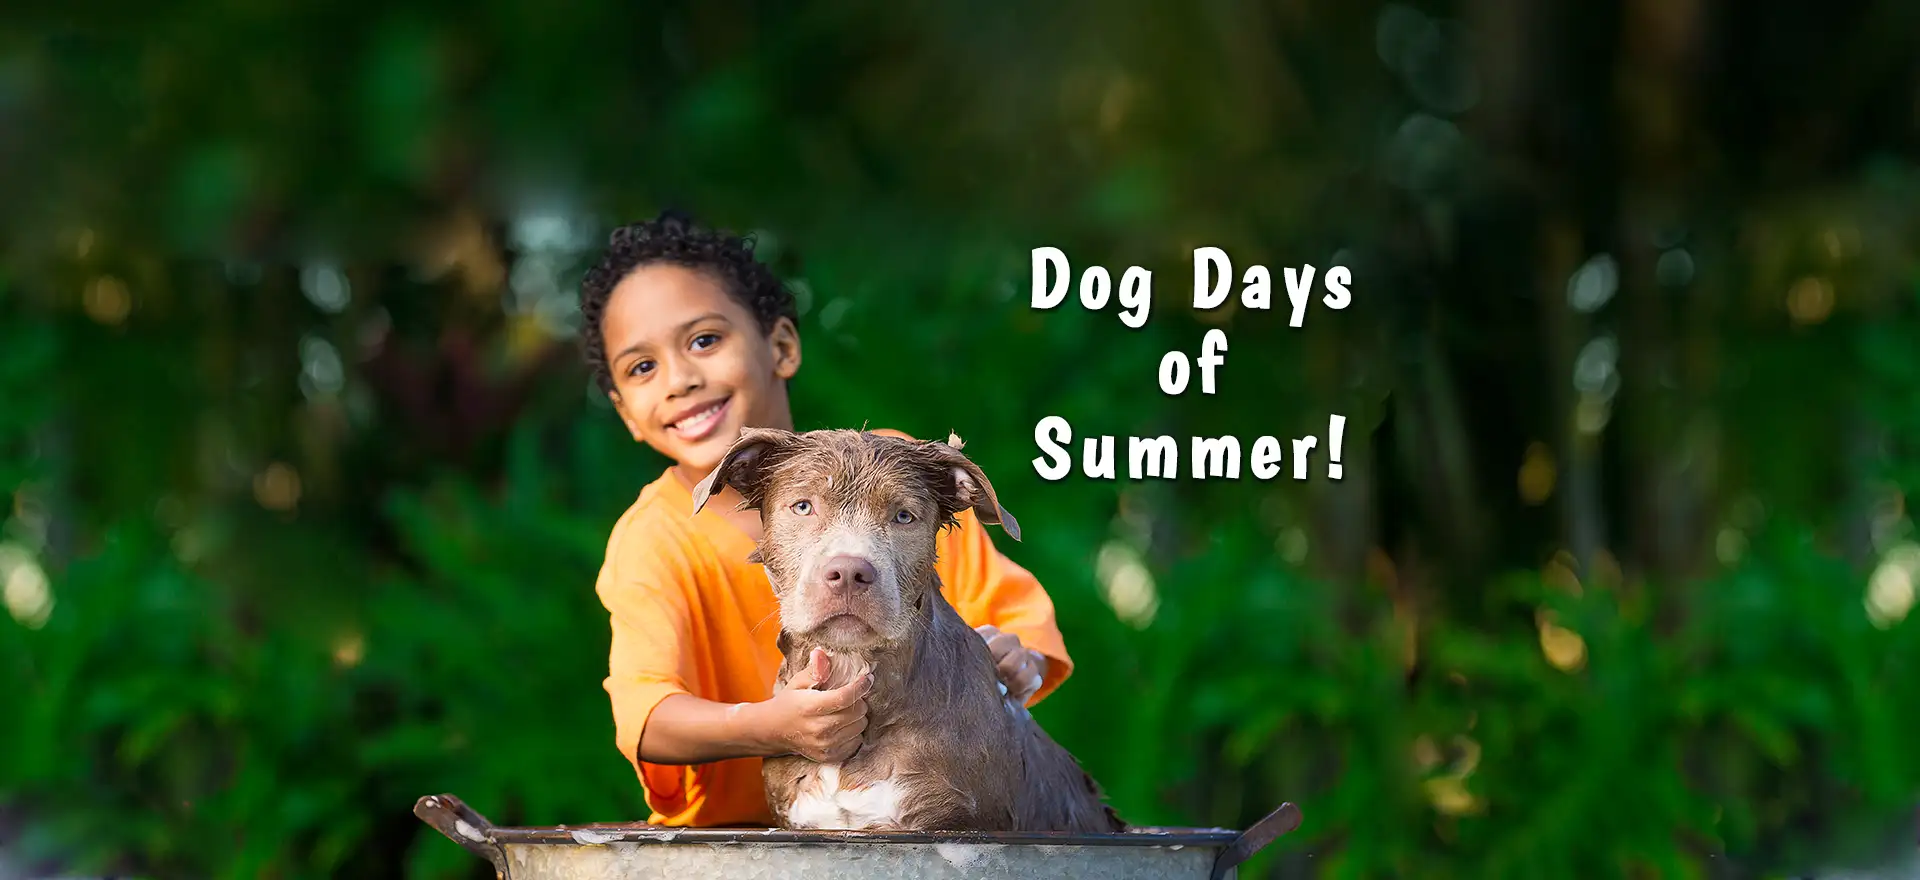 Dog days of Summer!